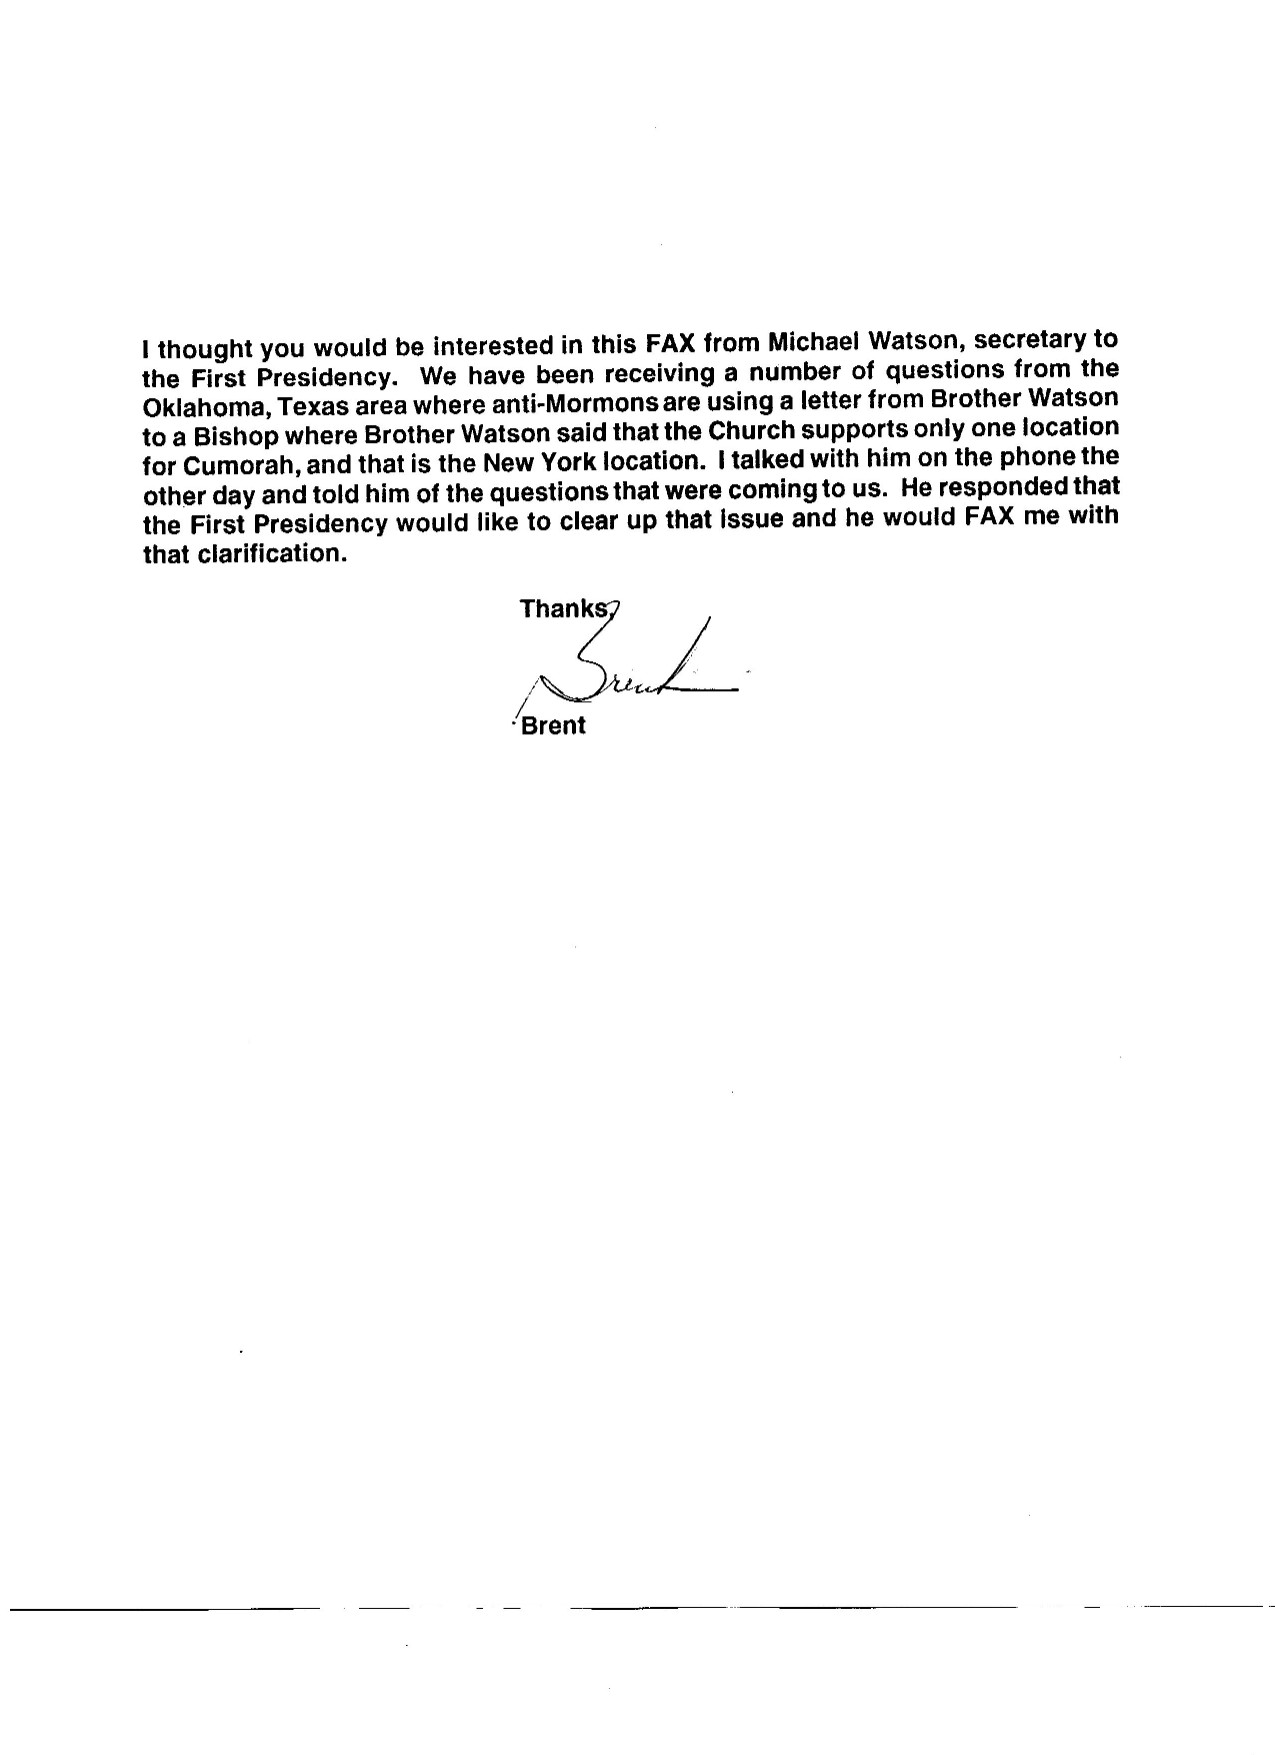 1st Pres Cover Letter - large.jpg